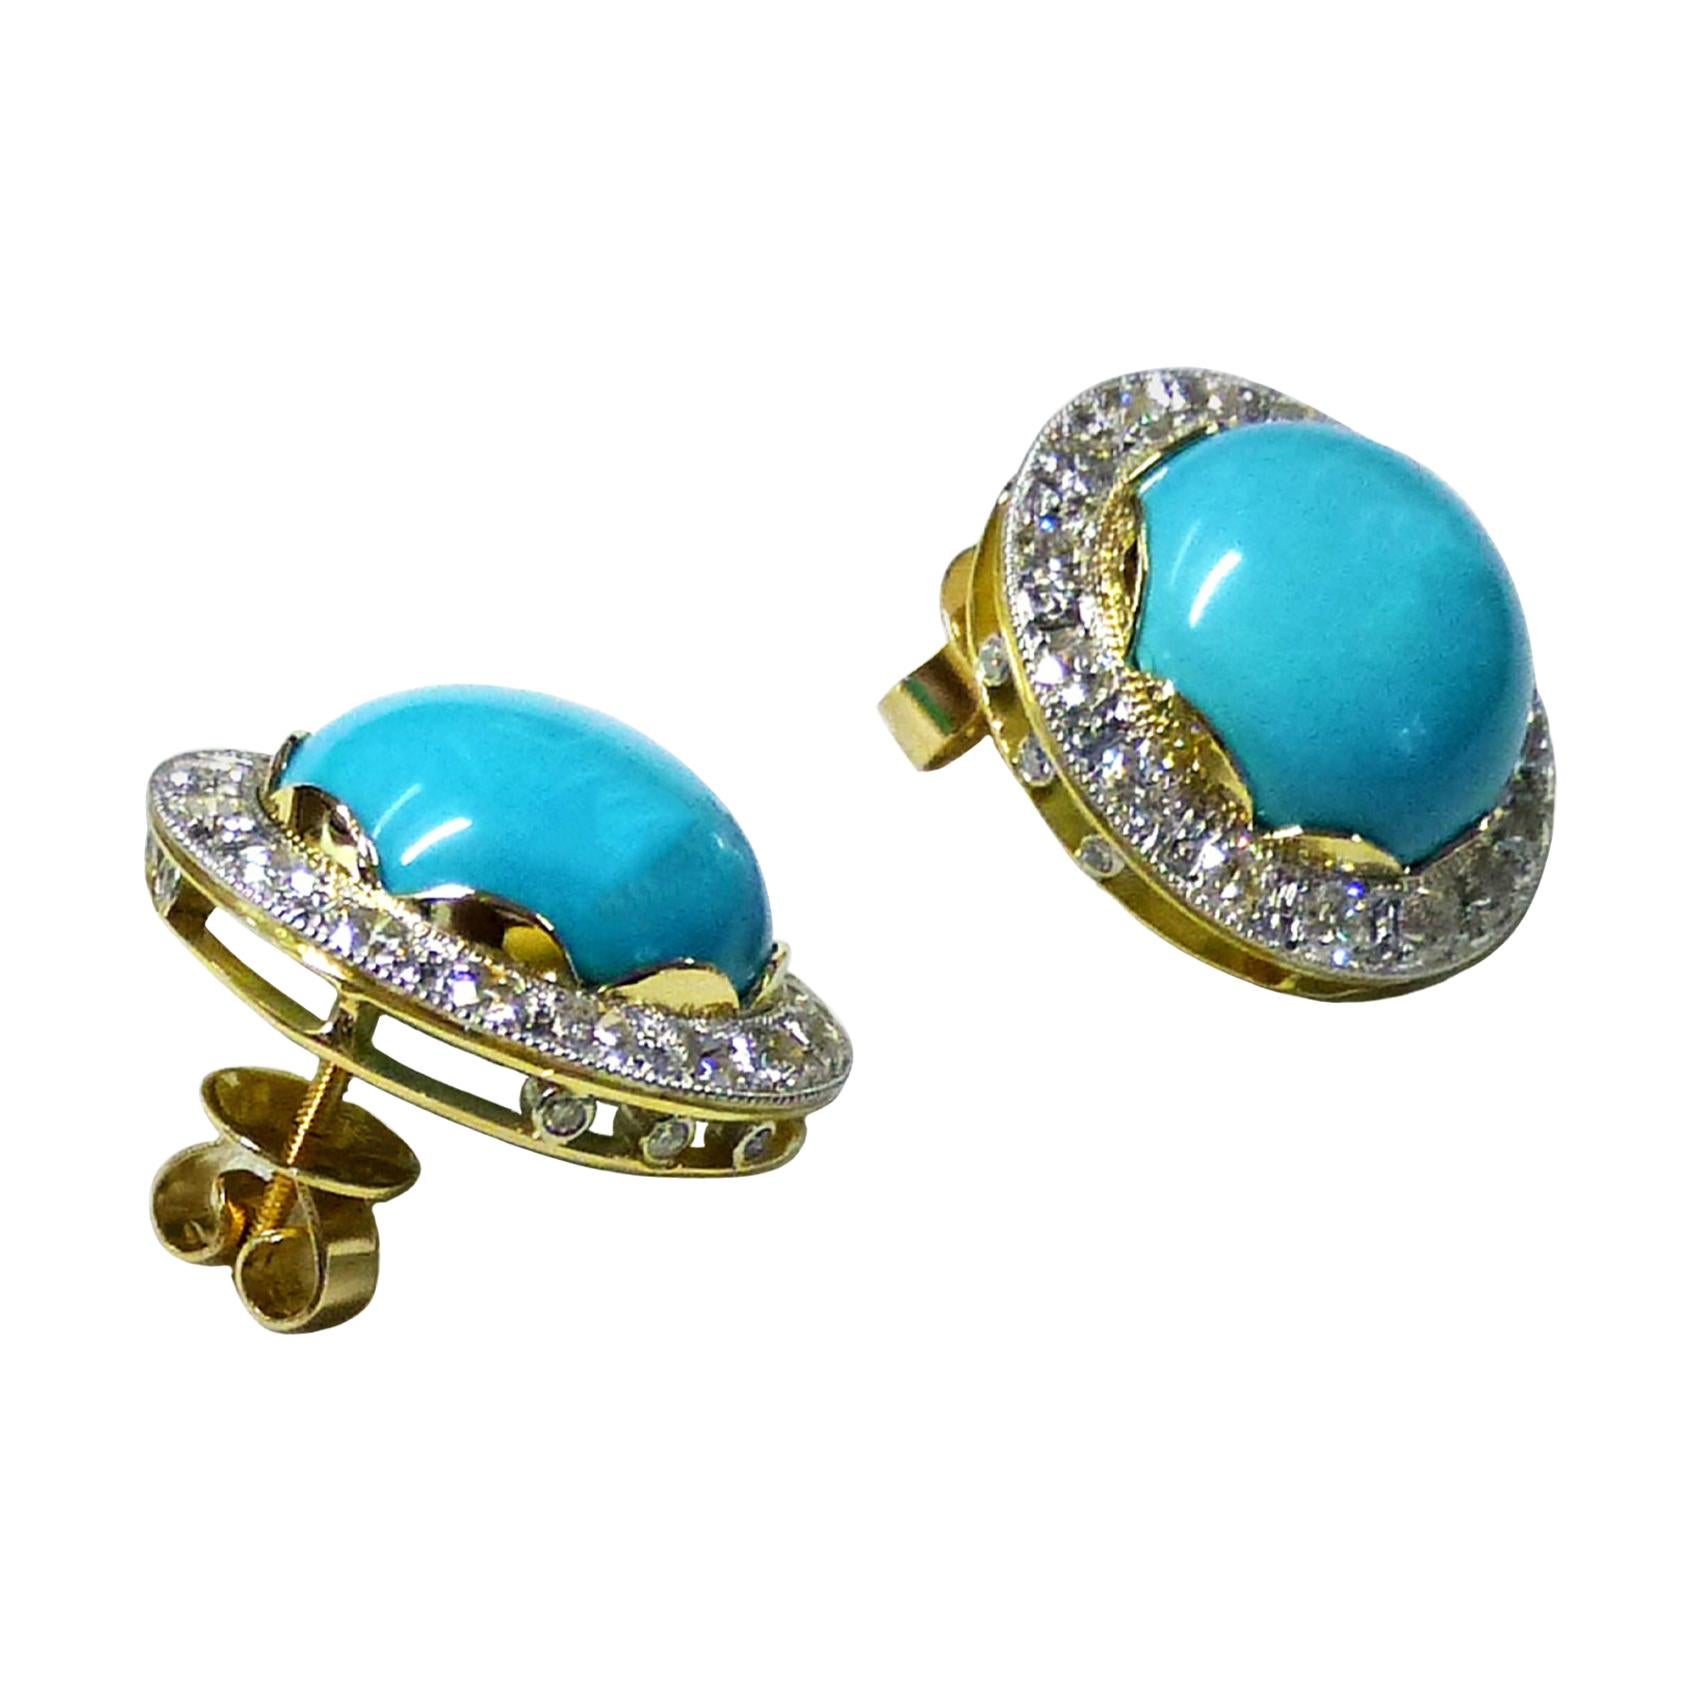 Paul Amey 18k Gold, "Sleeping Beauty" Turquoise and Diamond Earrings